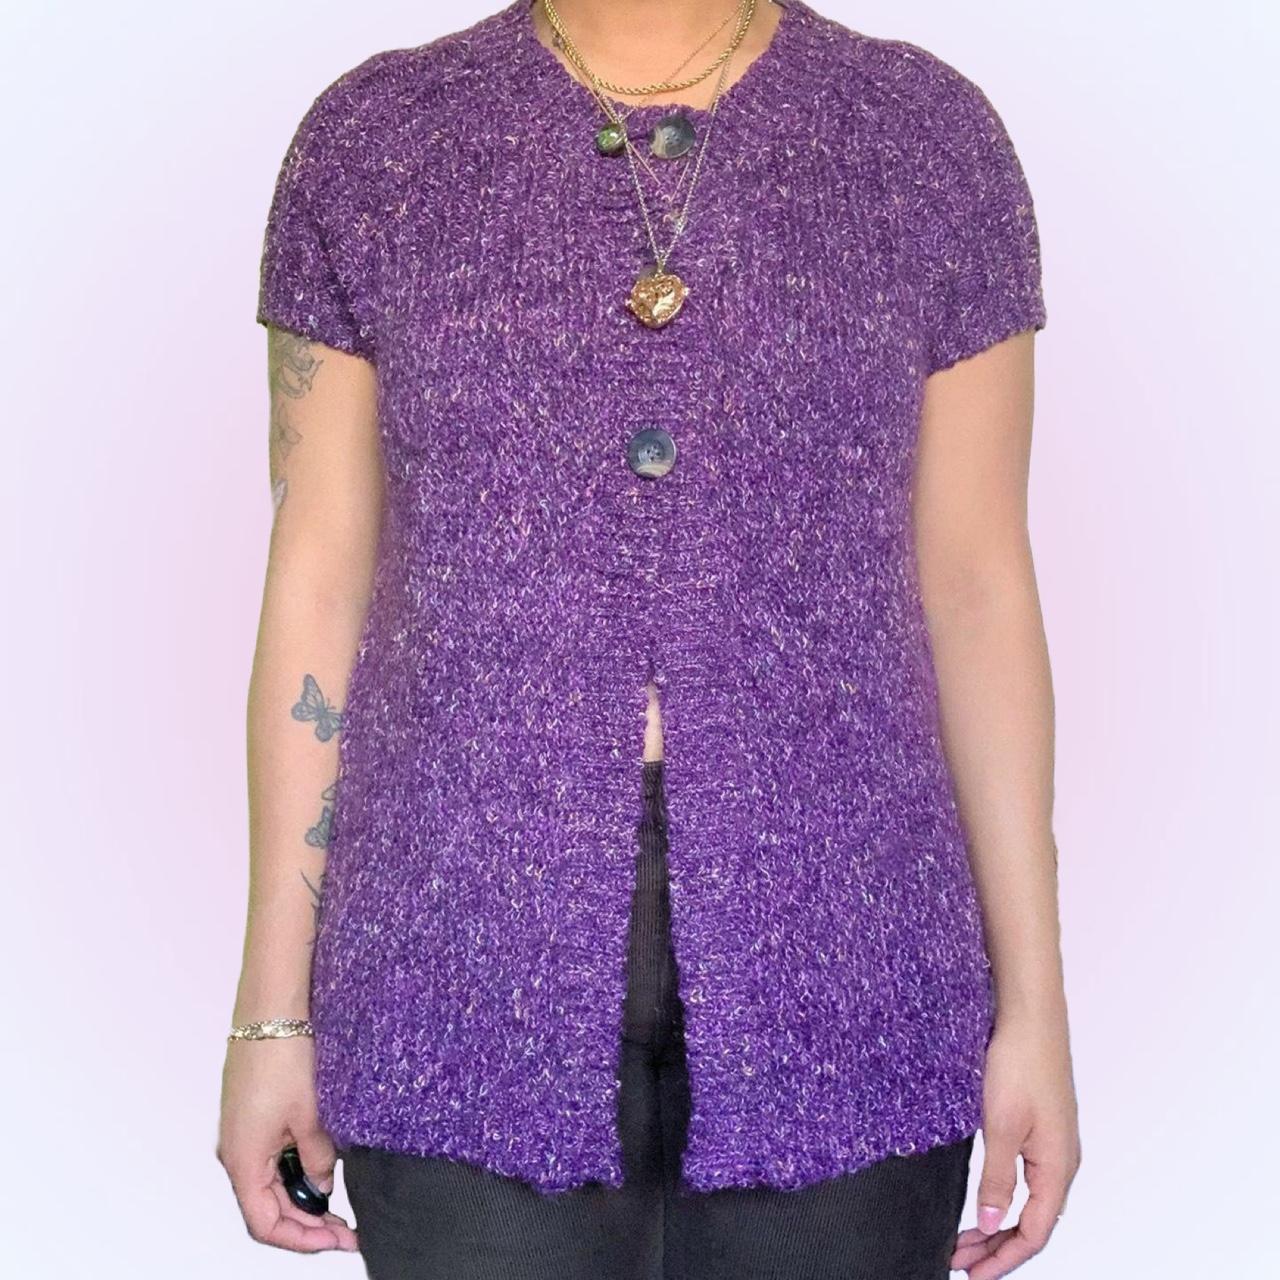 Product Image 1 - Vintage Purple Wool Cardigan

☆ A